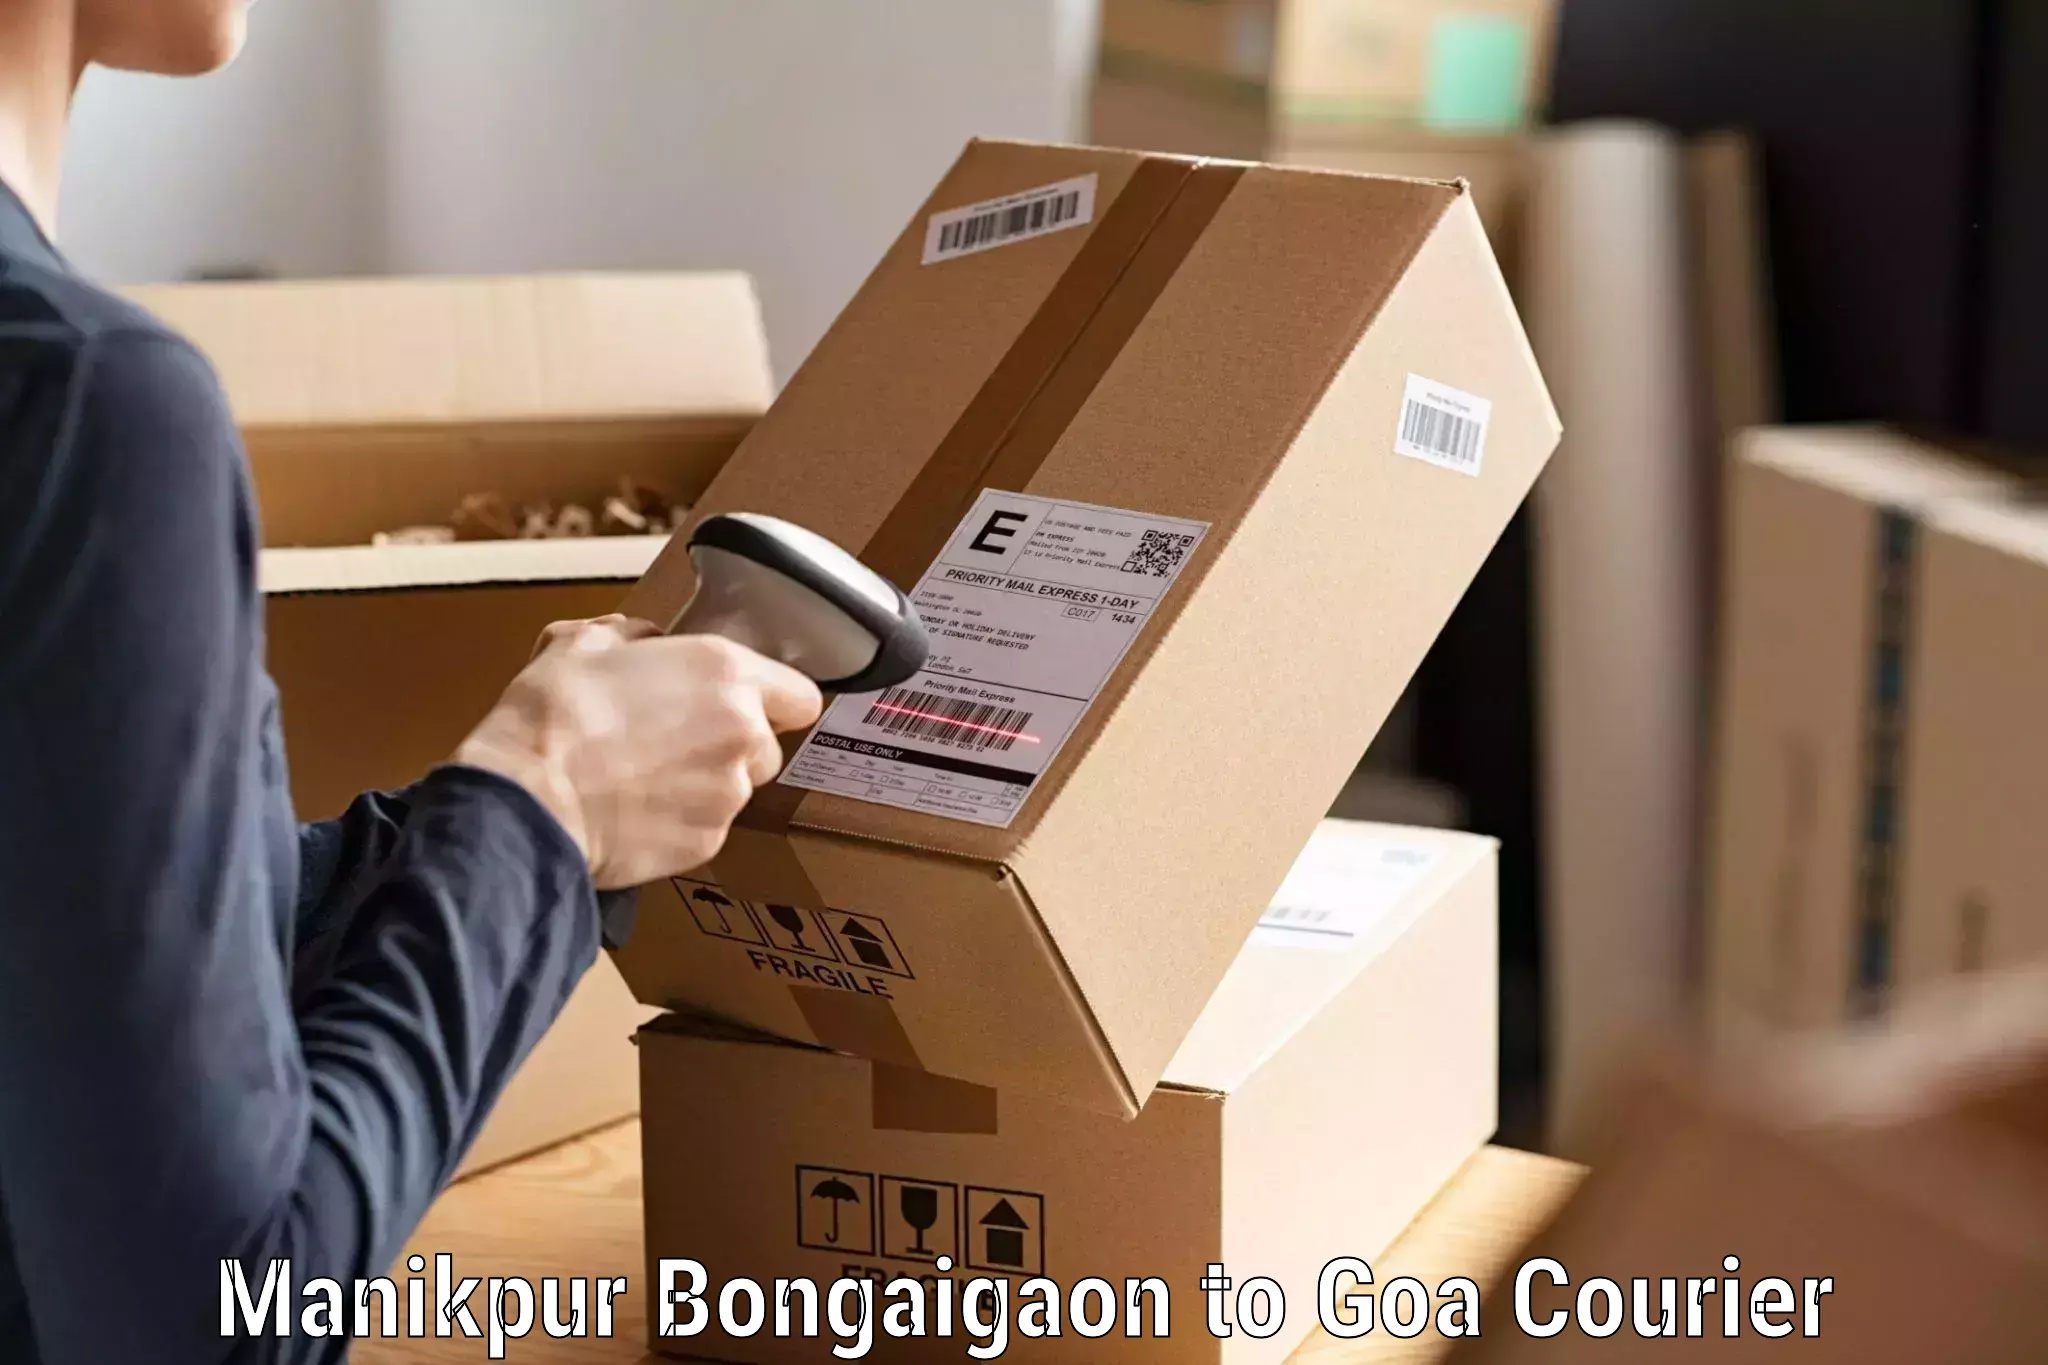 Advanced shipping technology Manikpur Bongaigaon to Margao